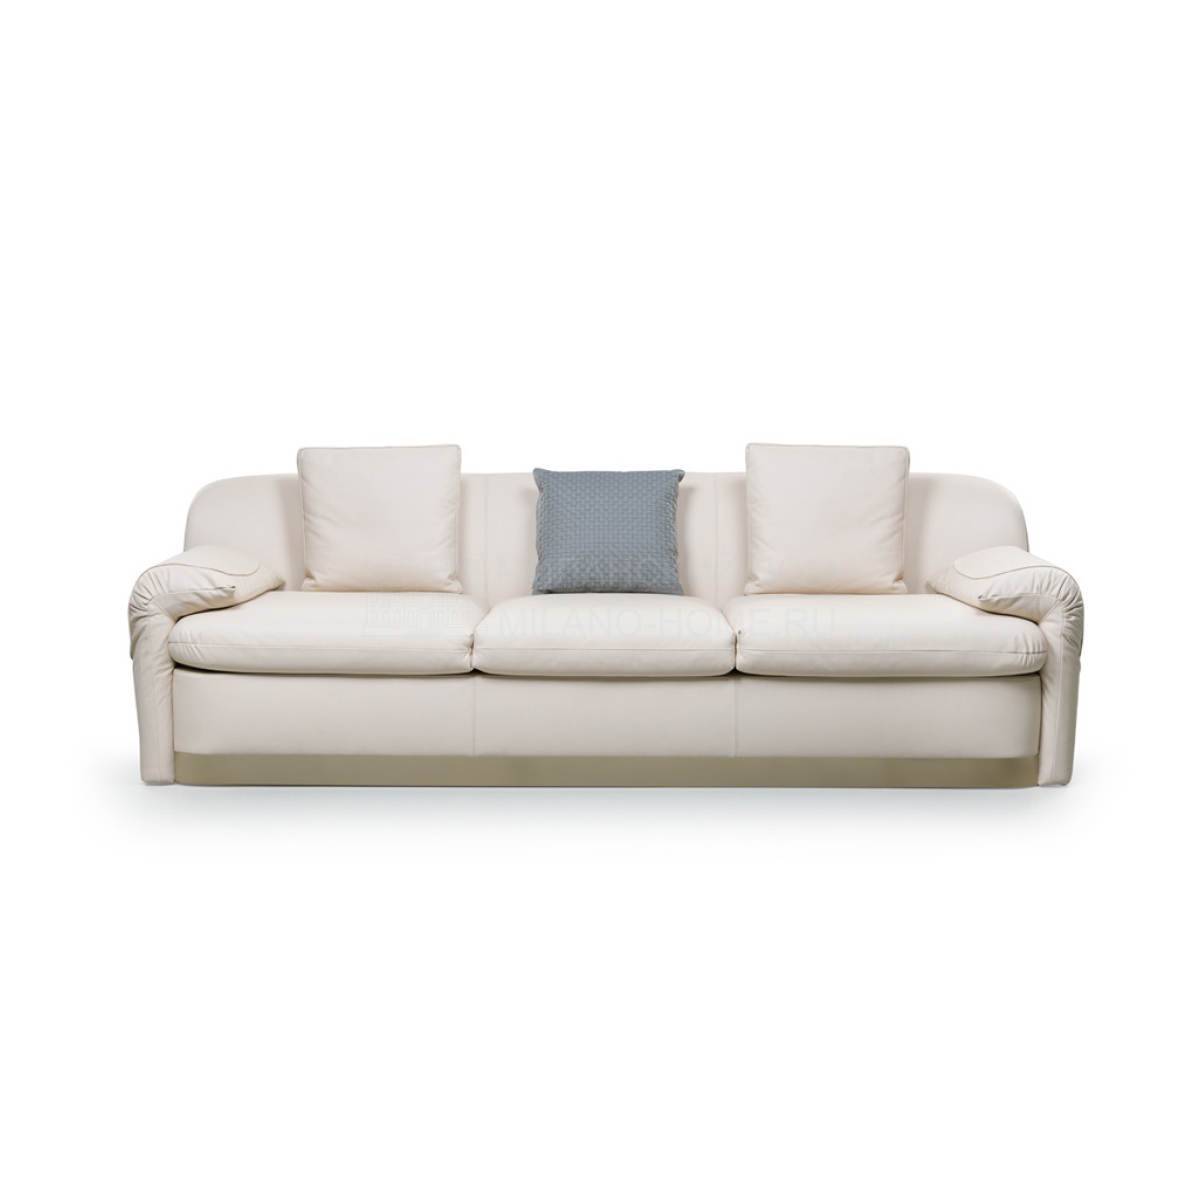 Прямой диван Eclipse sofa из Италии фабрики TURRI